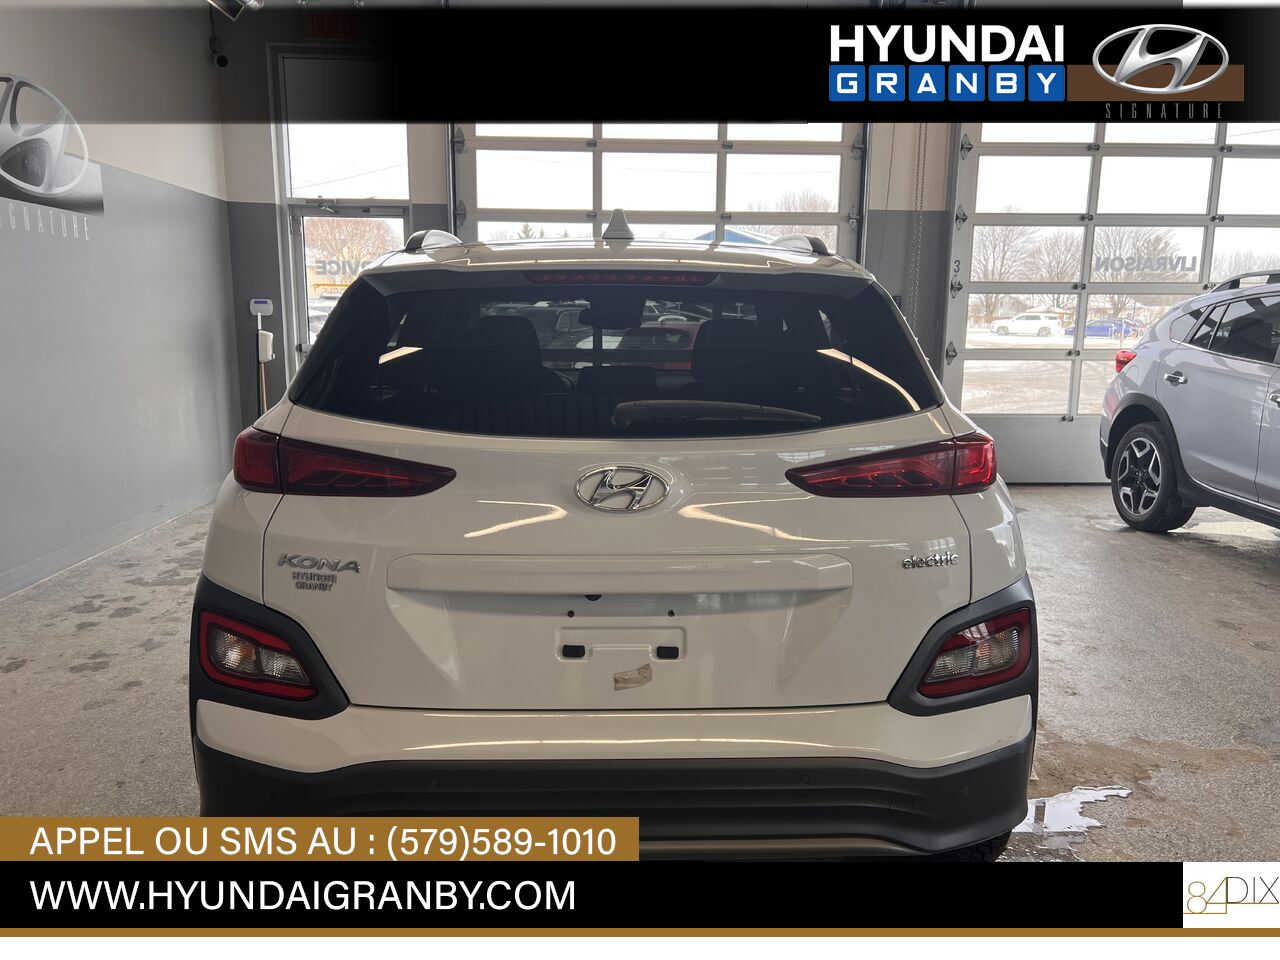 Hyundai Kona électrique 2019 Granby - photo #4